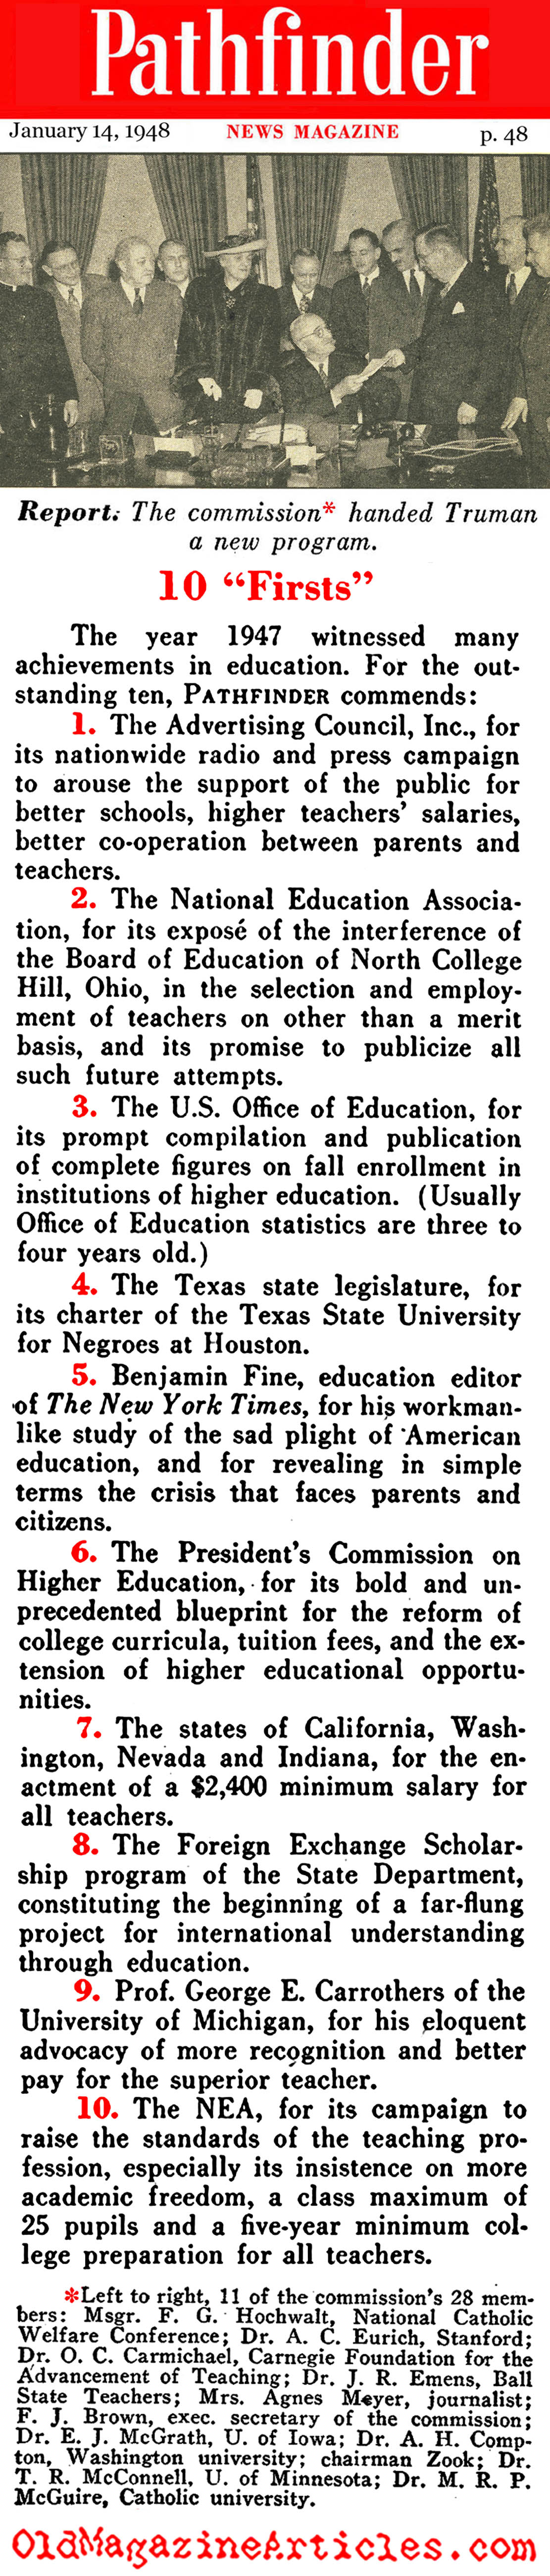 Spotlight on U.S. Schools in the Late Forties (Pathfinder Magazine, 1947)